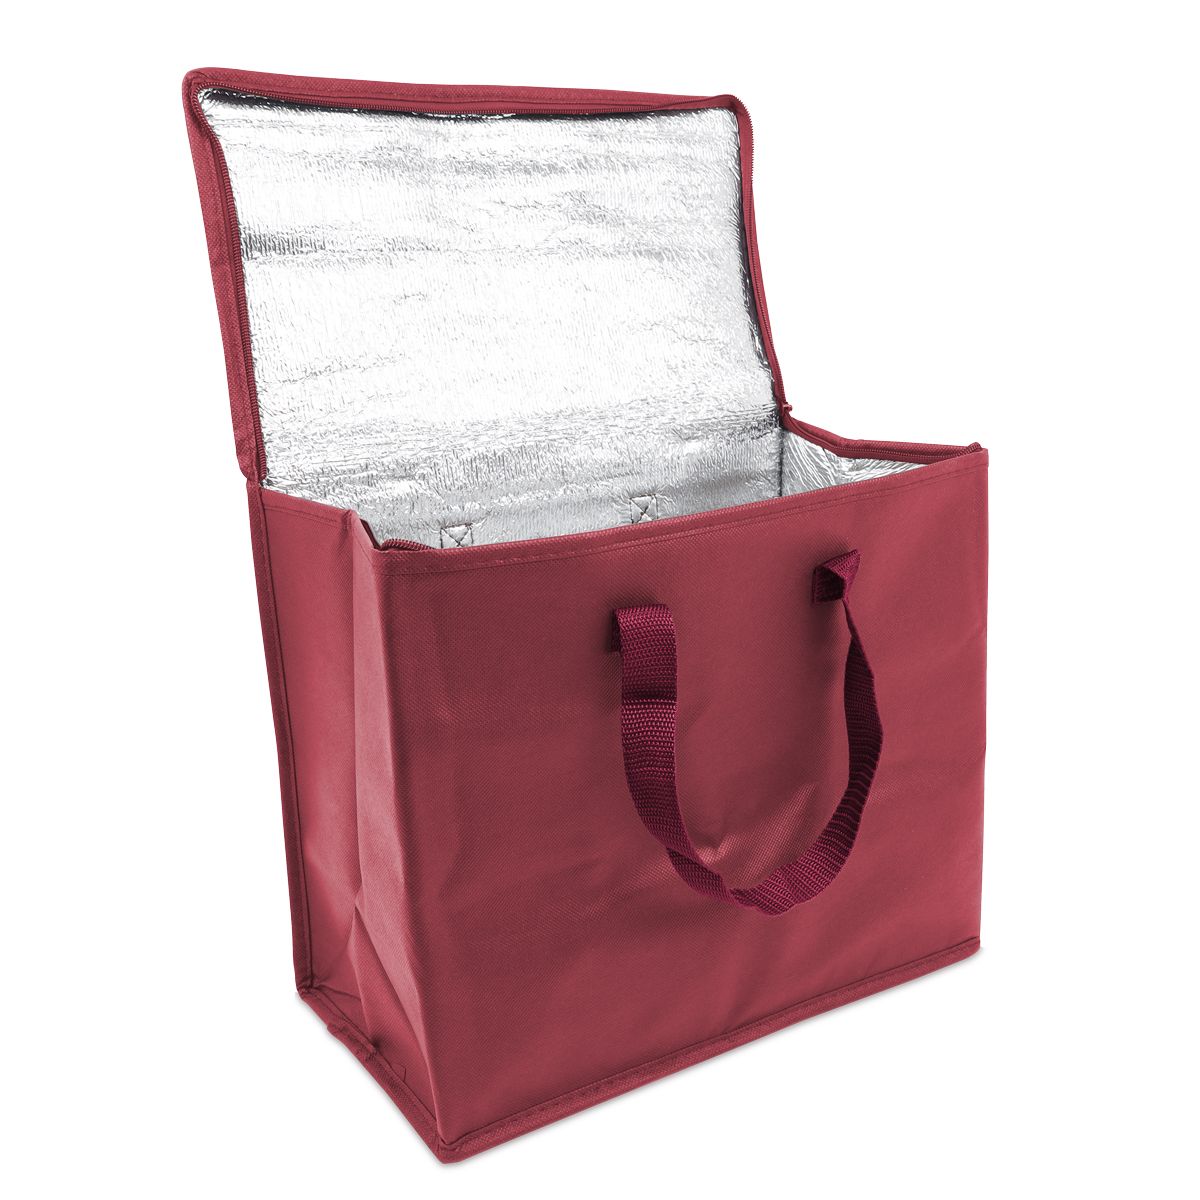 Non-woven cool bags with zipper closing